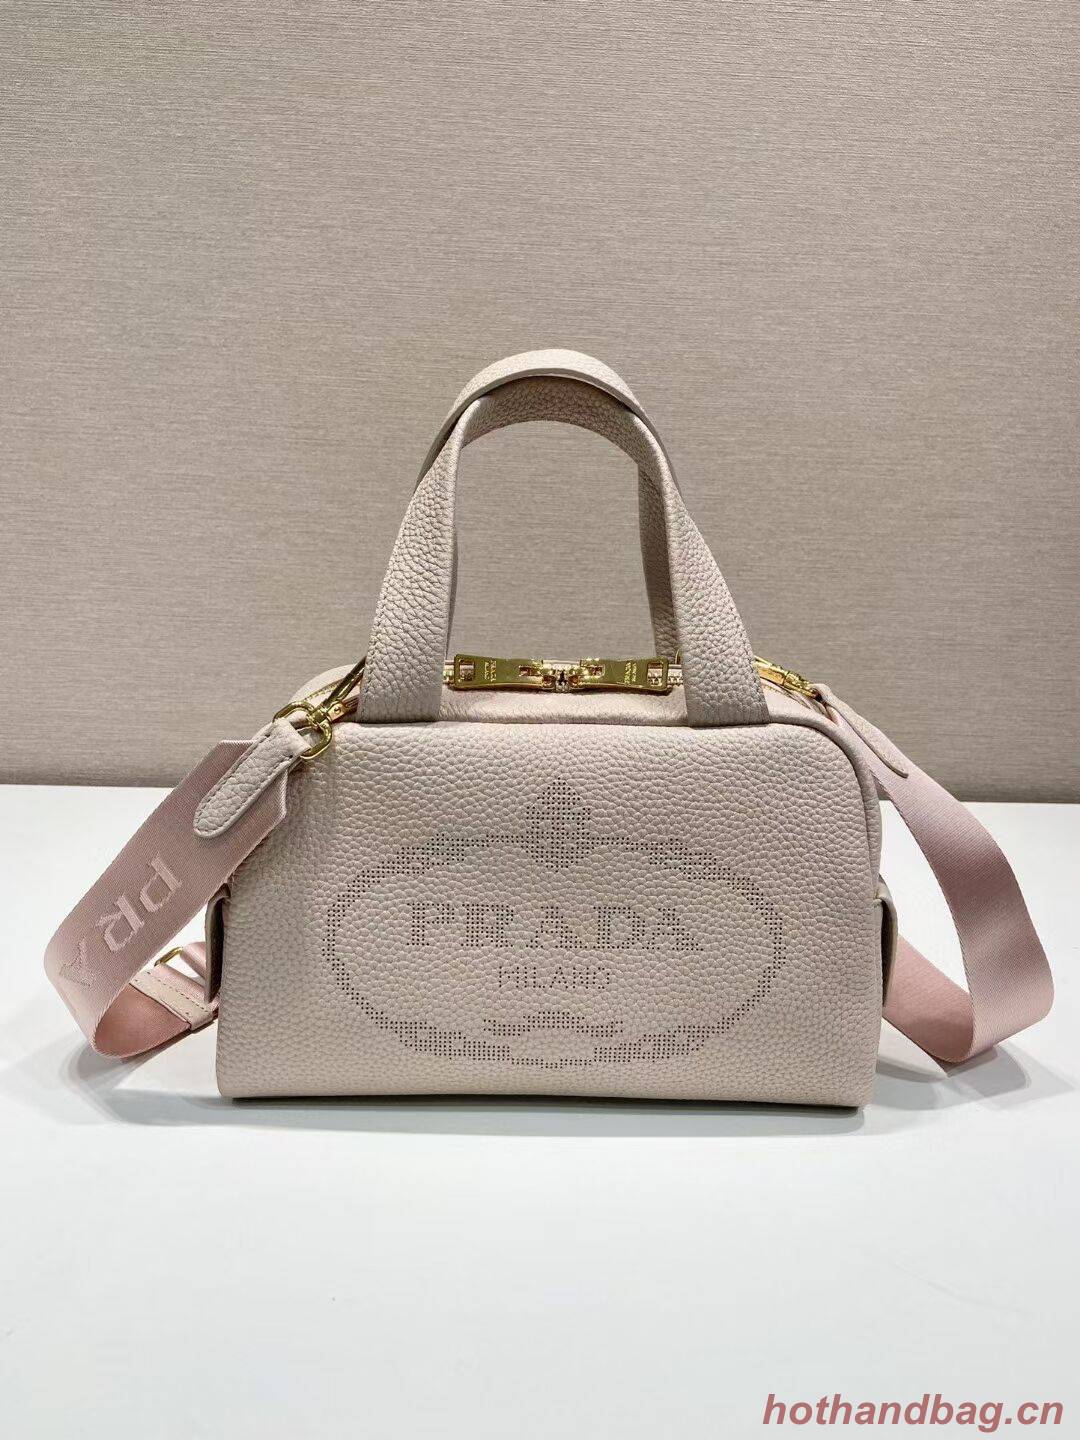 Prada leather tote bag 1DH770 light pink